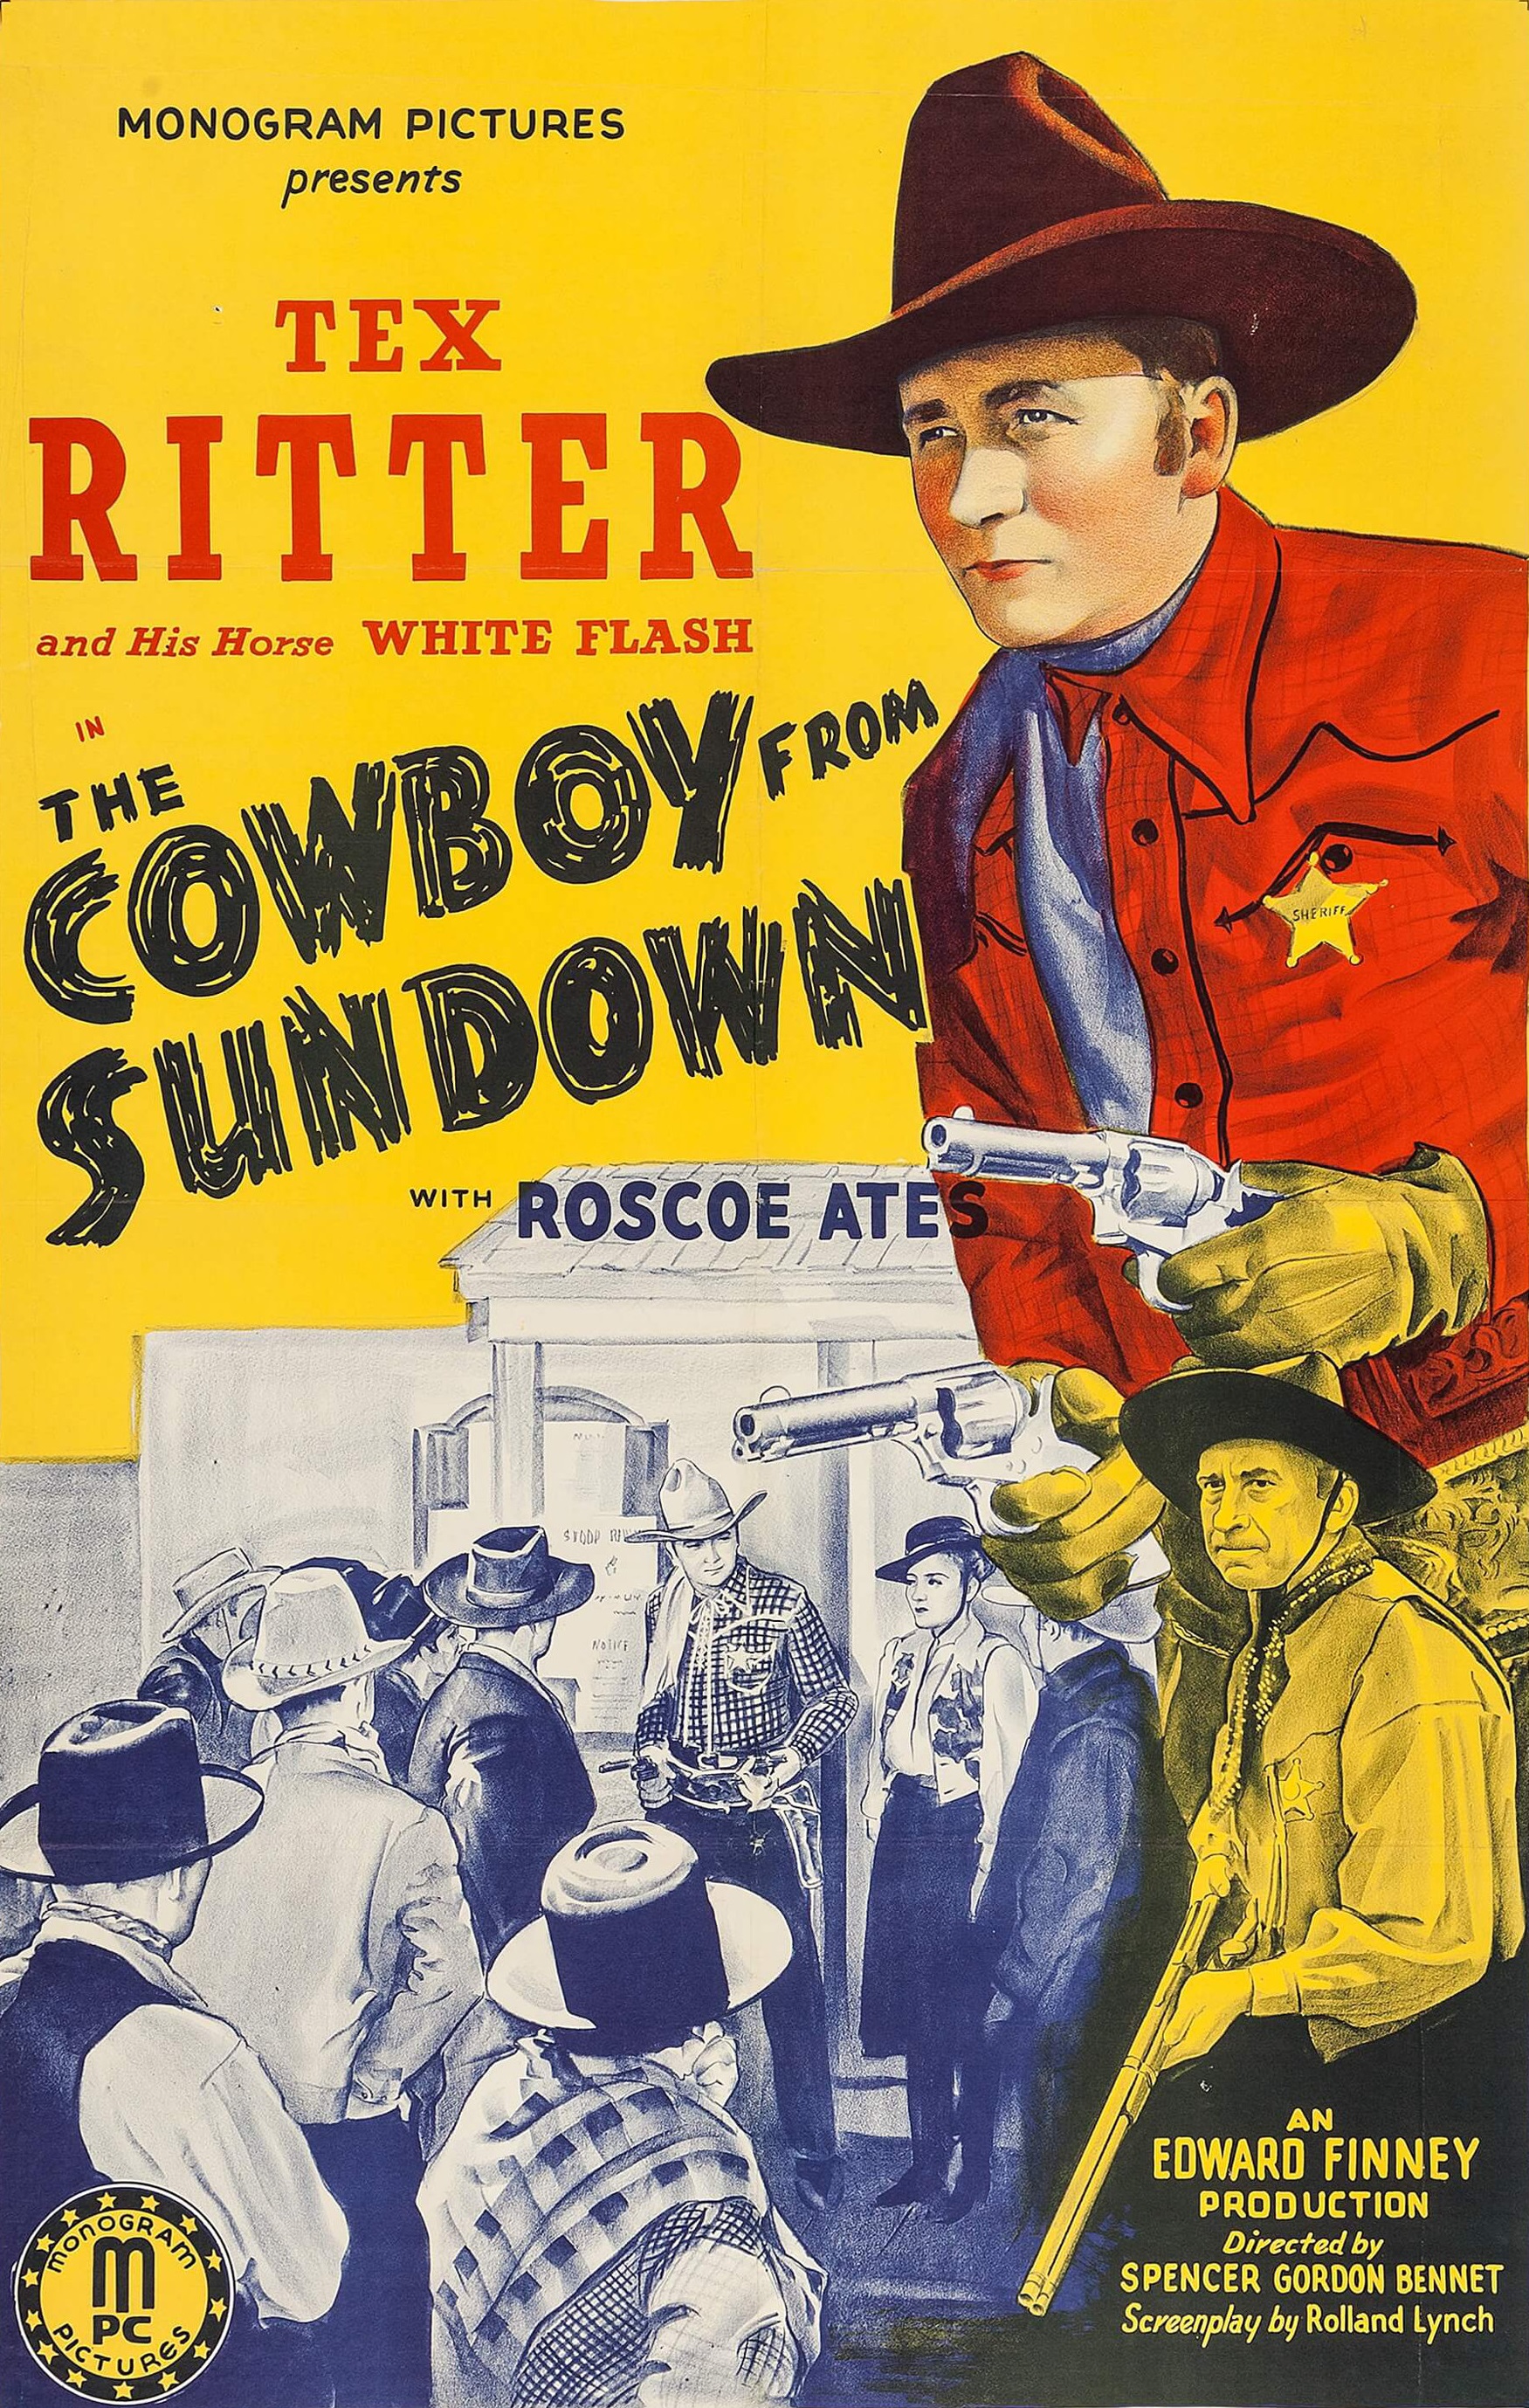 The Cowboy from Sundown